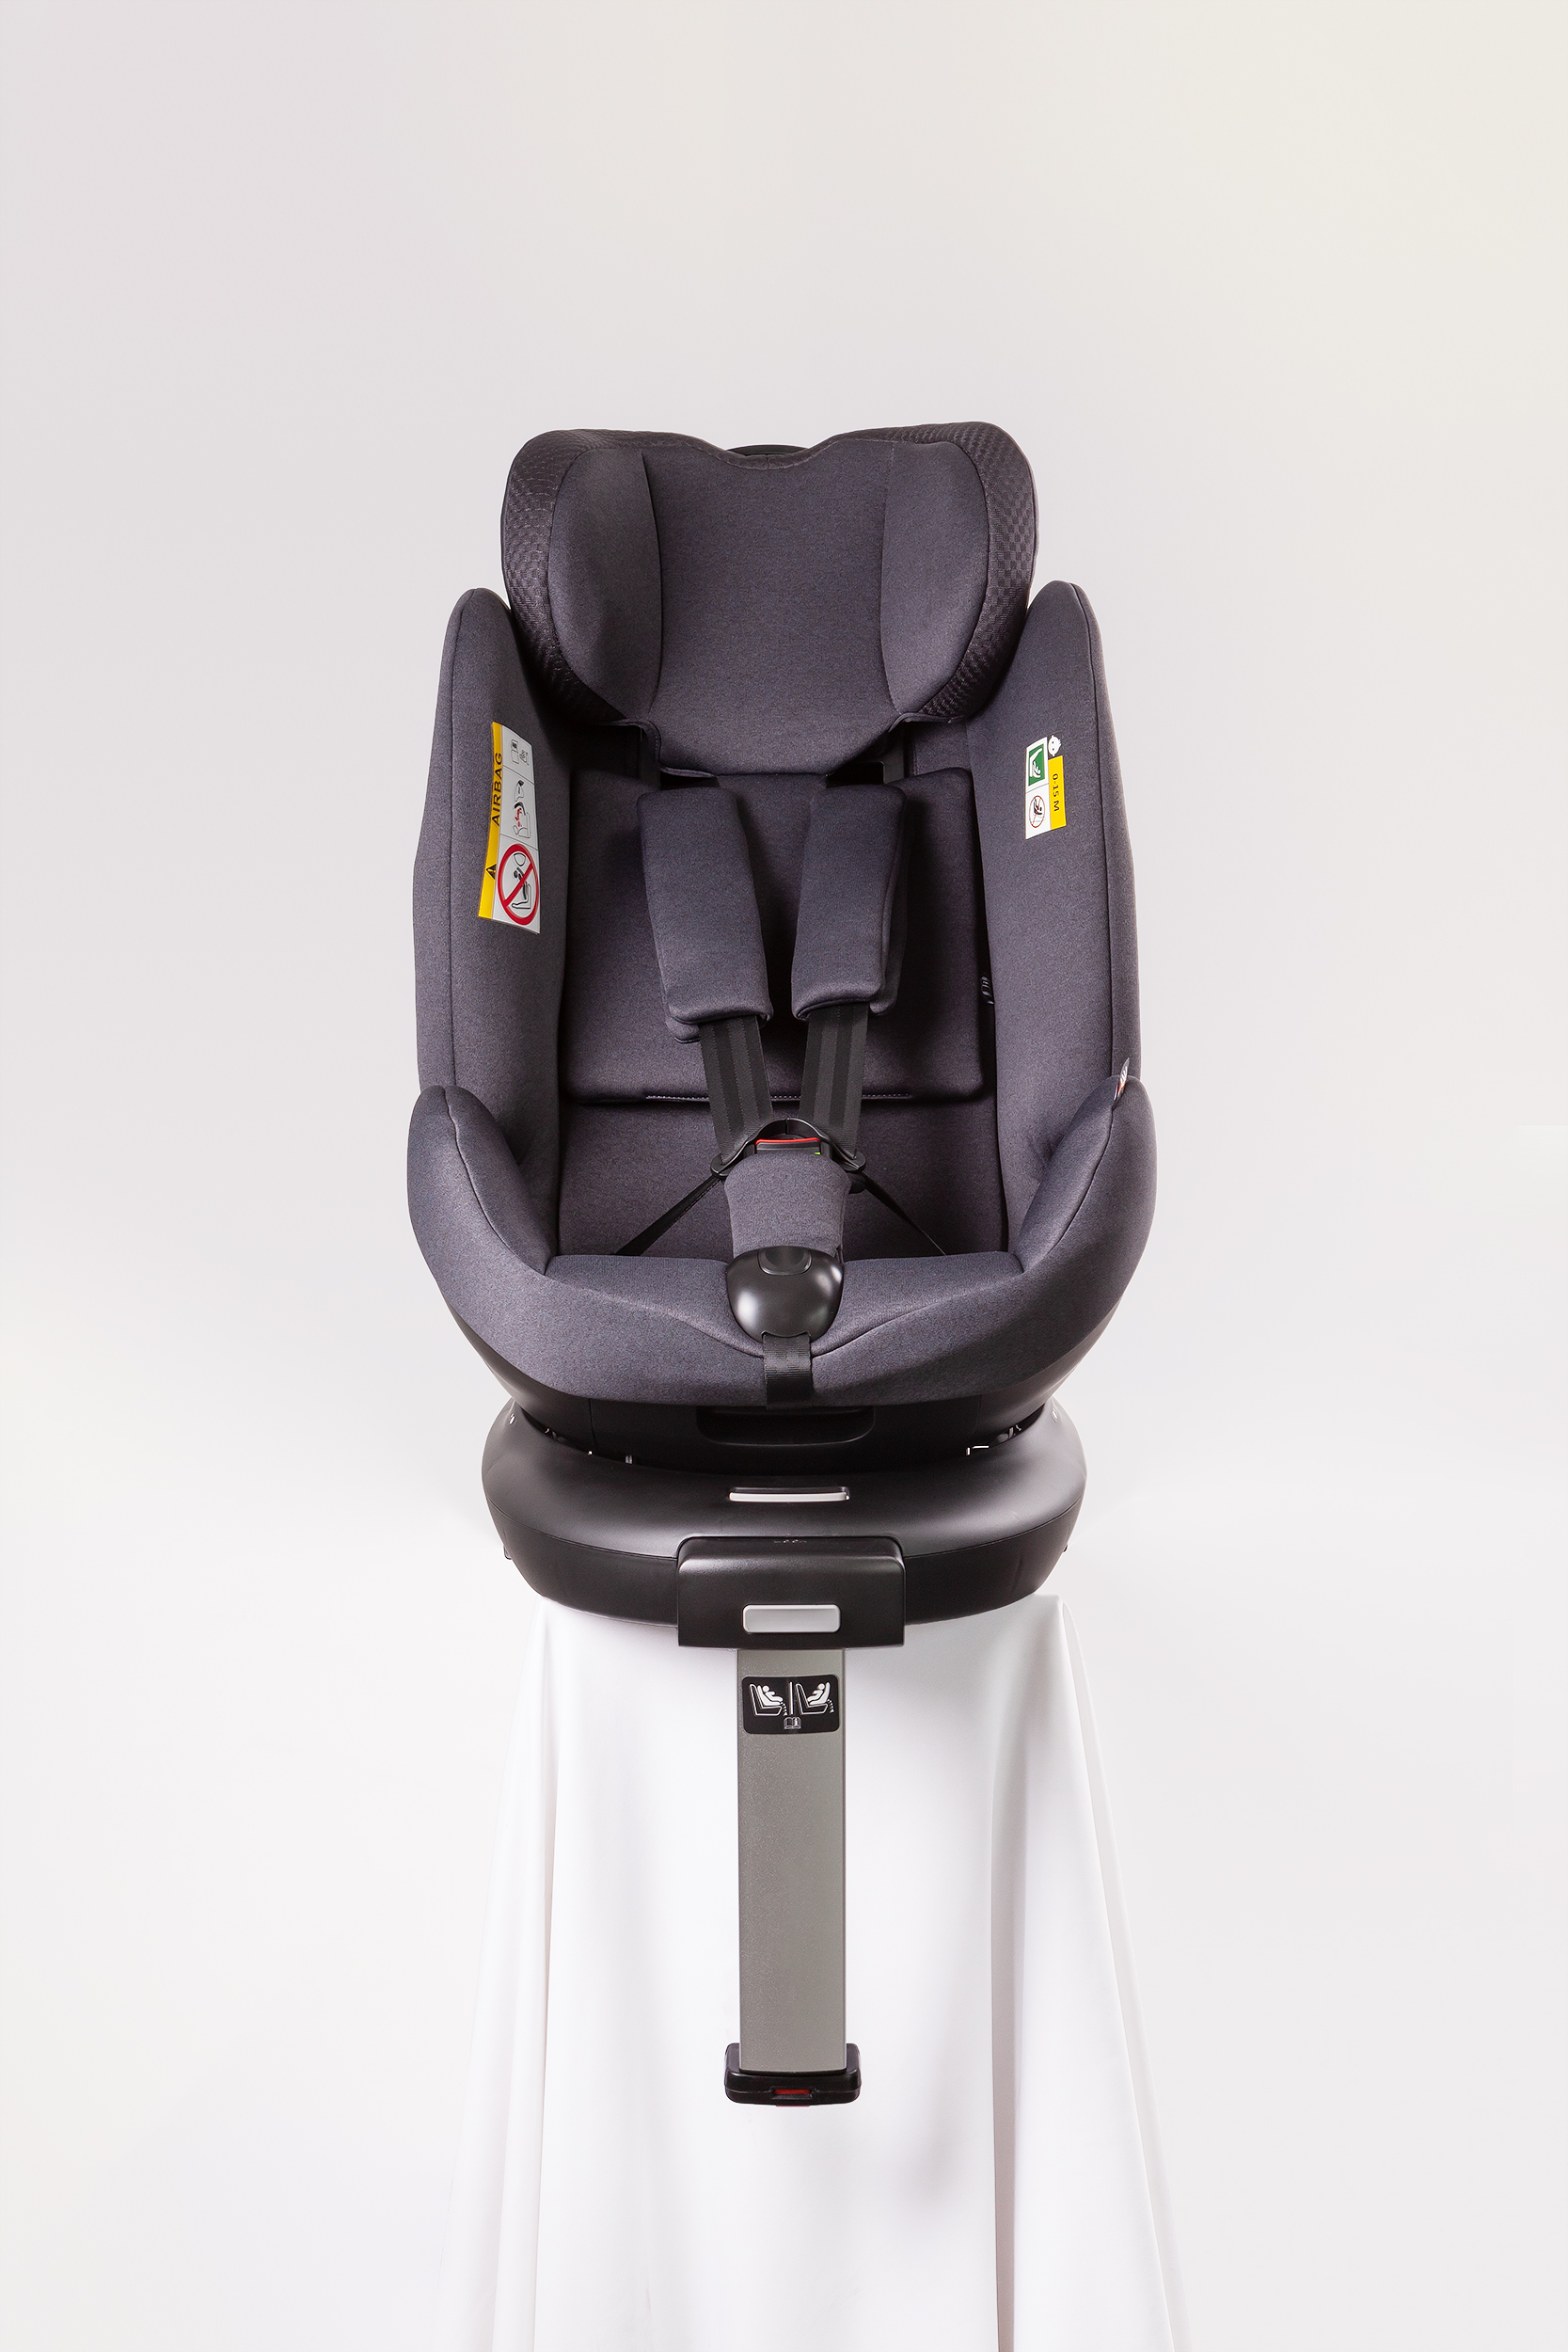 360 swivel car seat with isofix